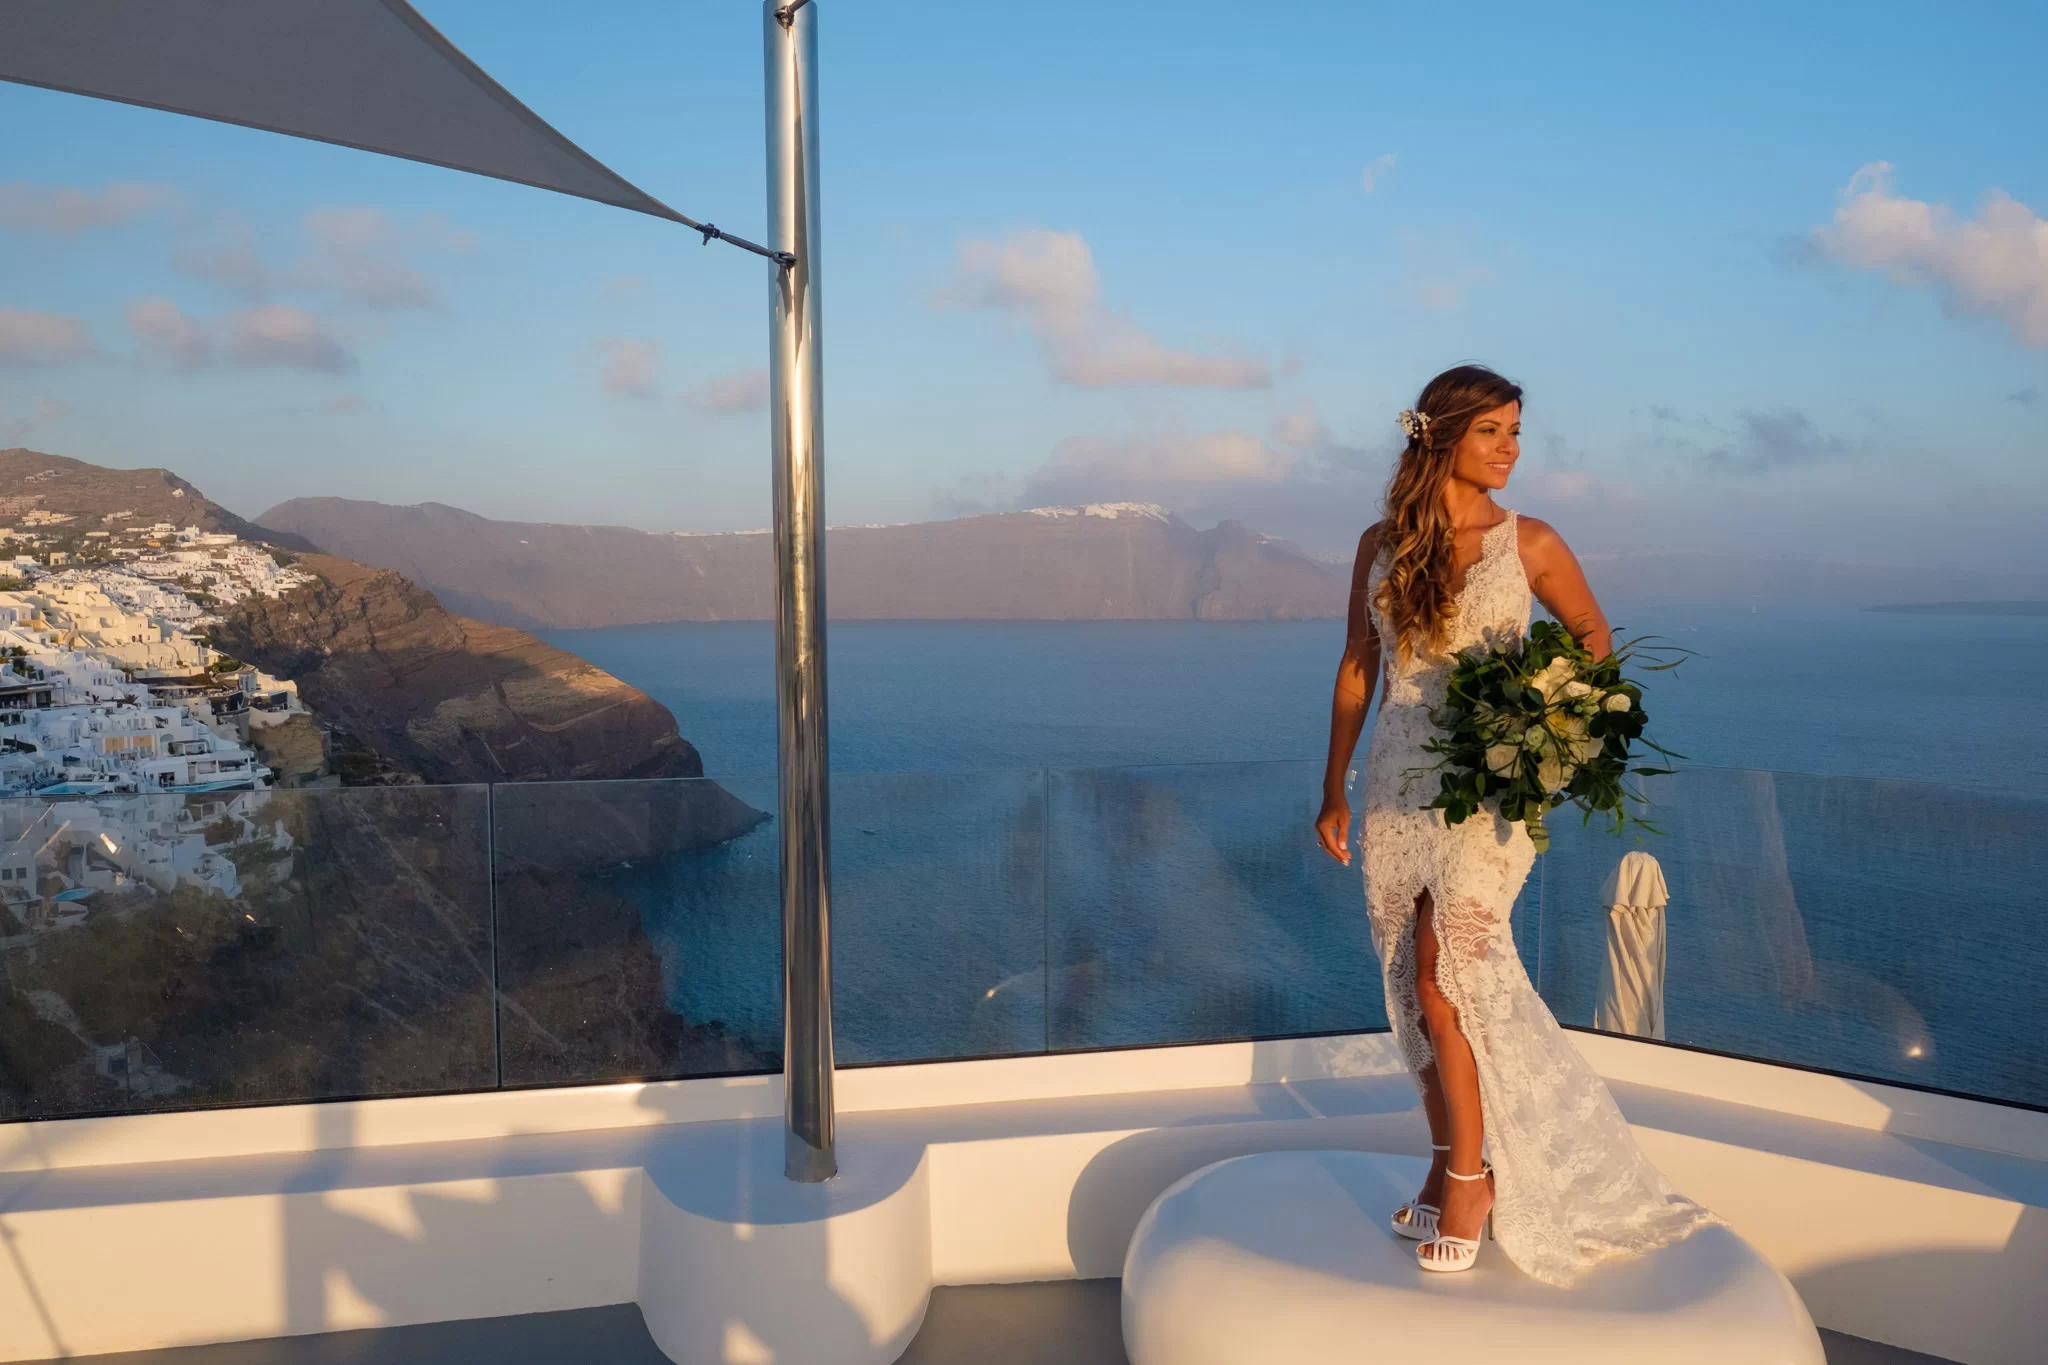 038-casamento-wedding-santorini-oia-canaves-Wendell-Carvalho-e-Karina-Peloi-destination-wedding-from-Florianopolis-brazil-to-Greece